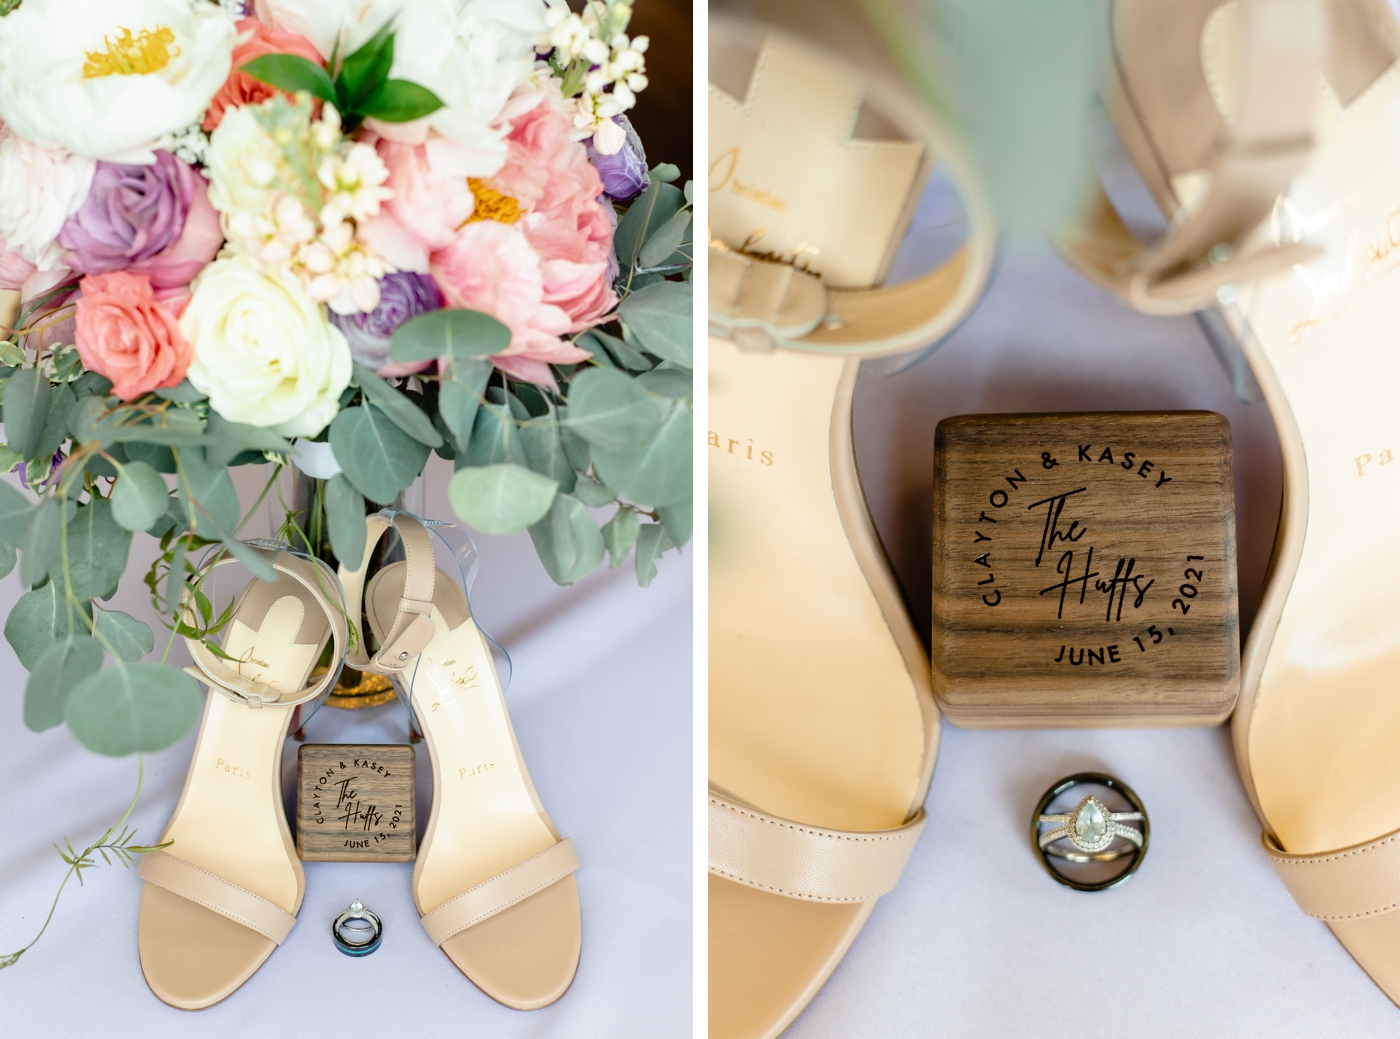 Wedding heels and ring box